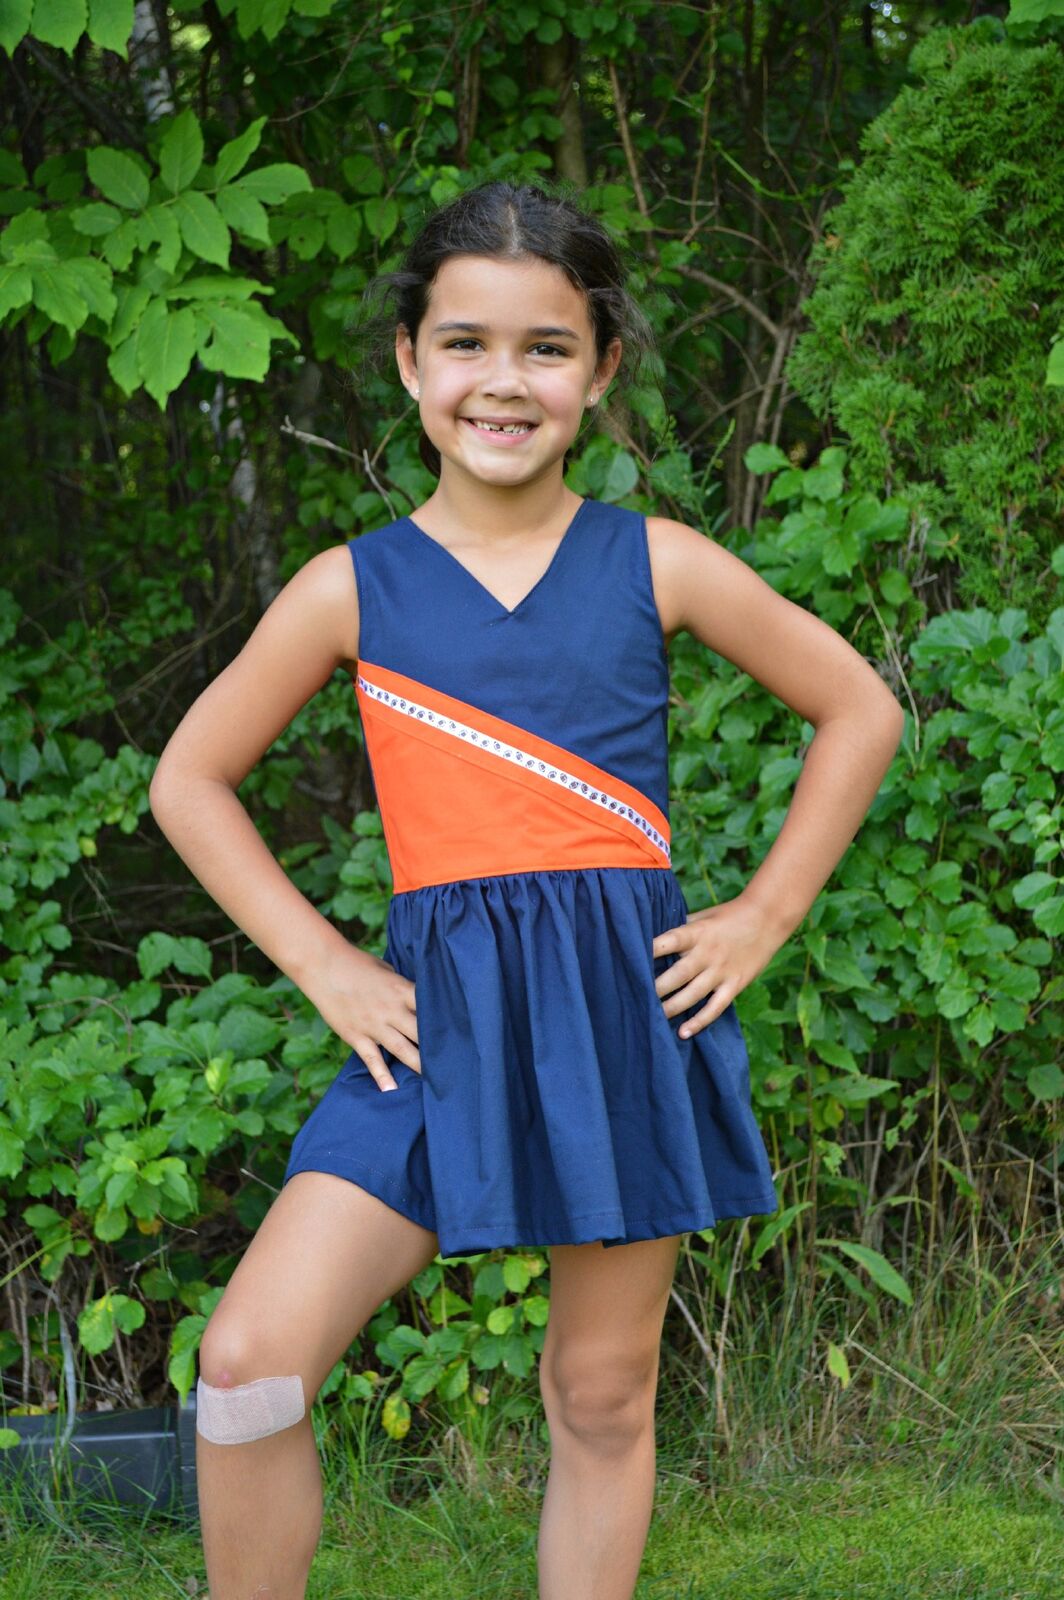 Jersey's Cheer Dress Sizes NB to 14 Kids PDF Pattern